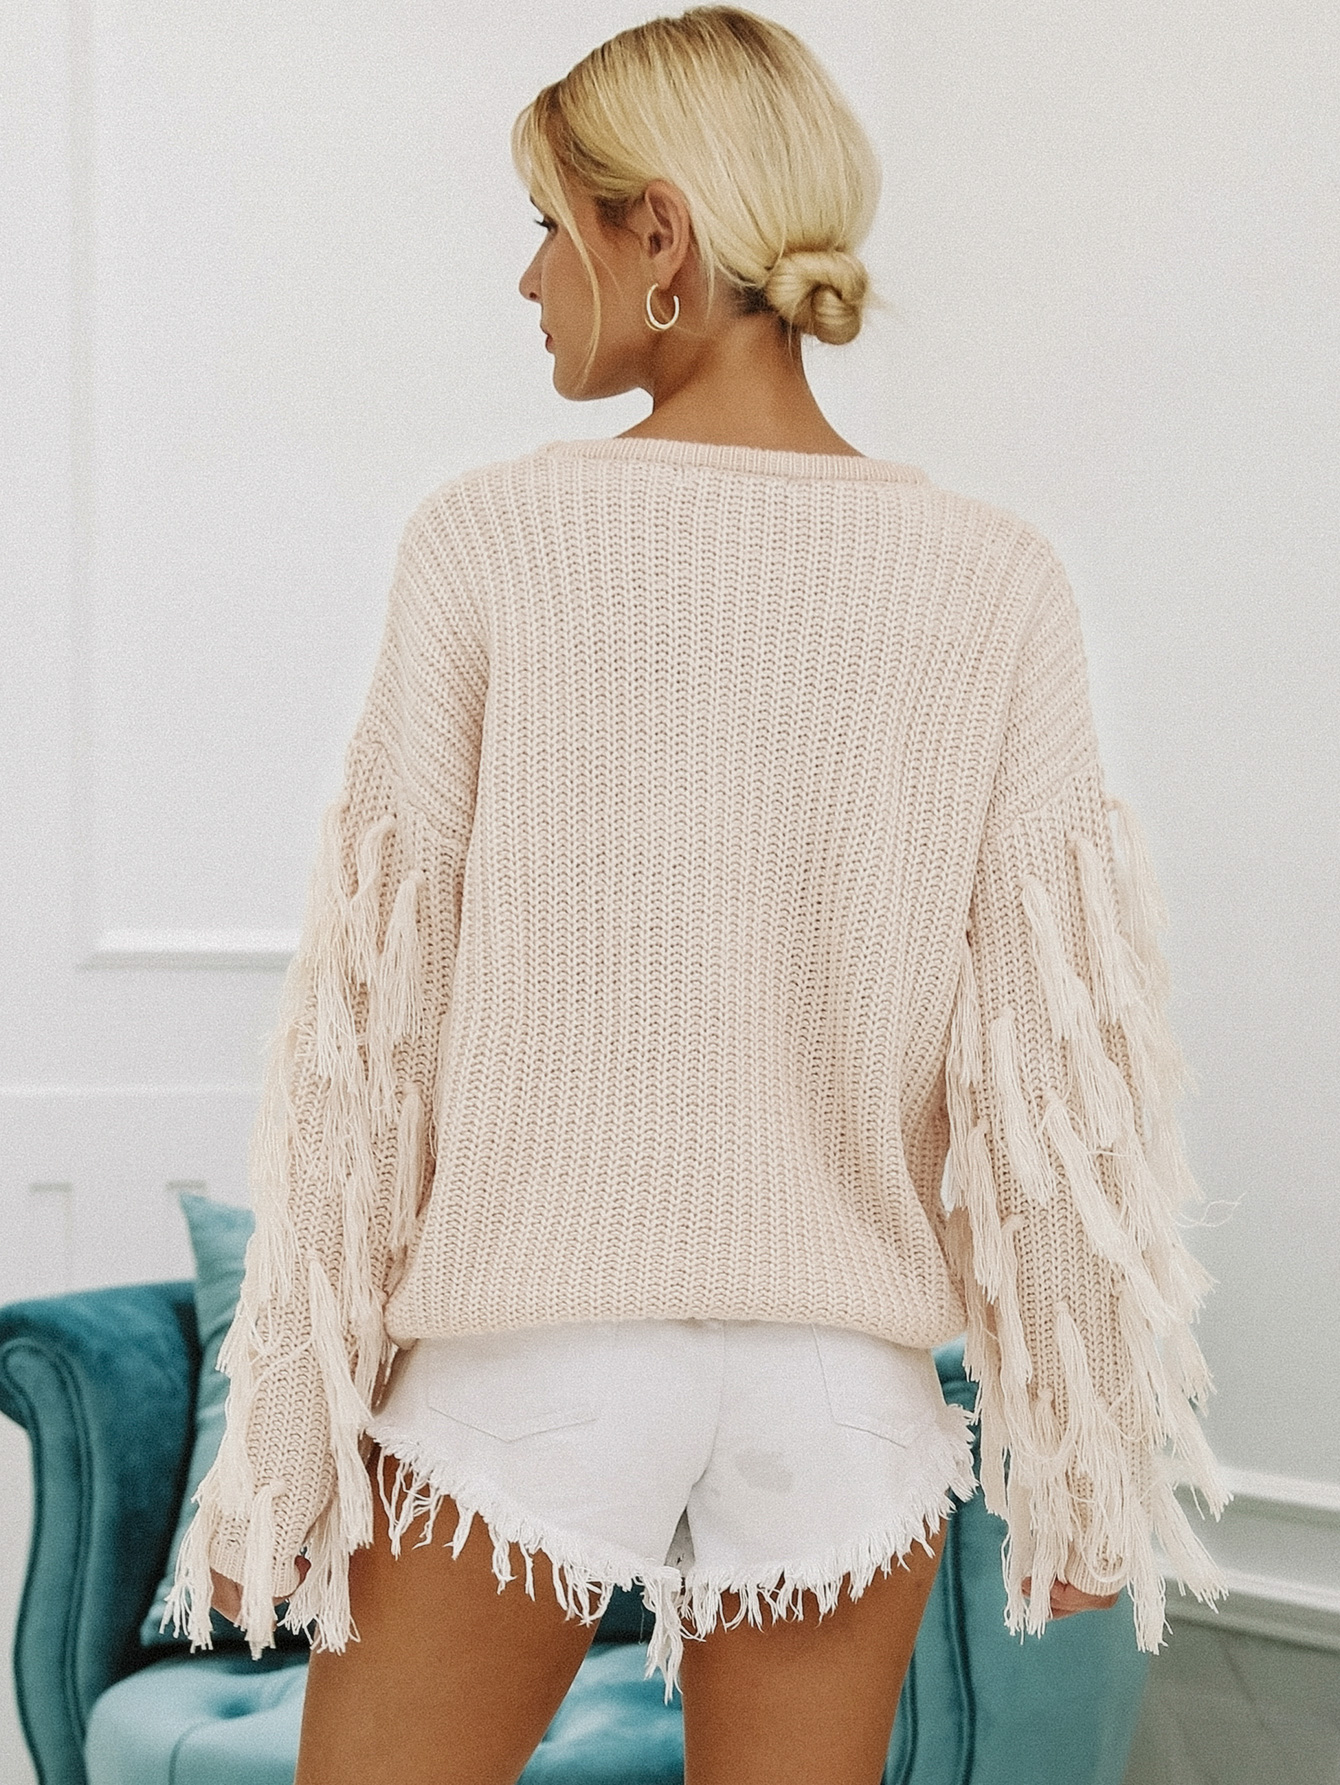 2019 new tassel sweater fashion women39s wholesalepicture10